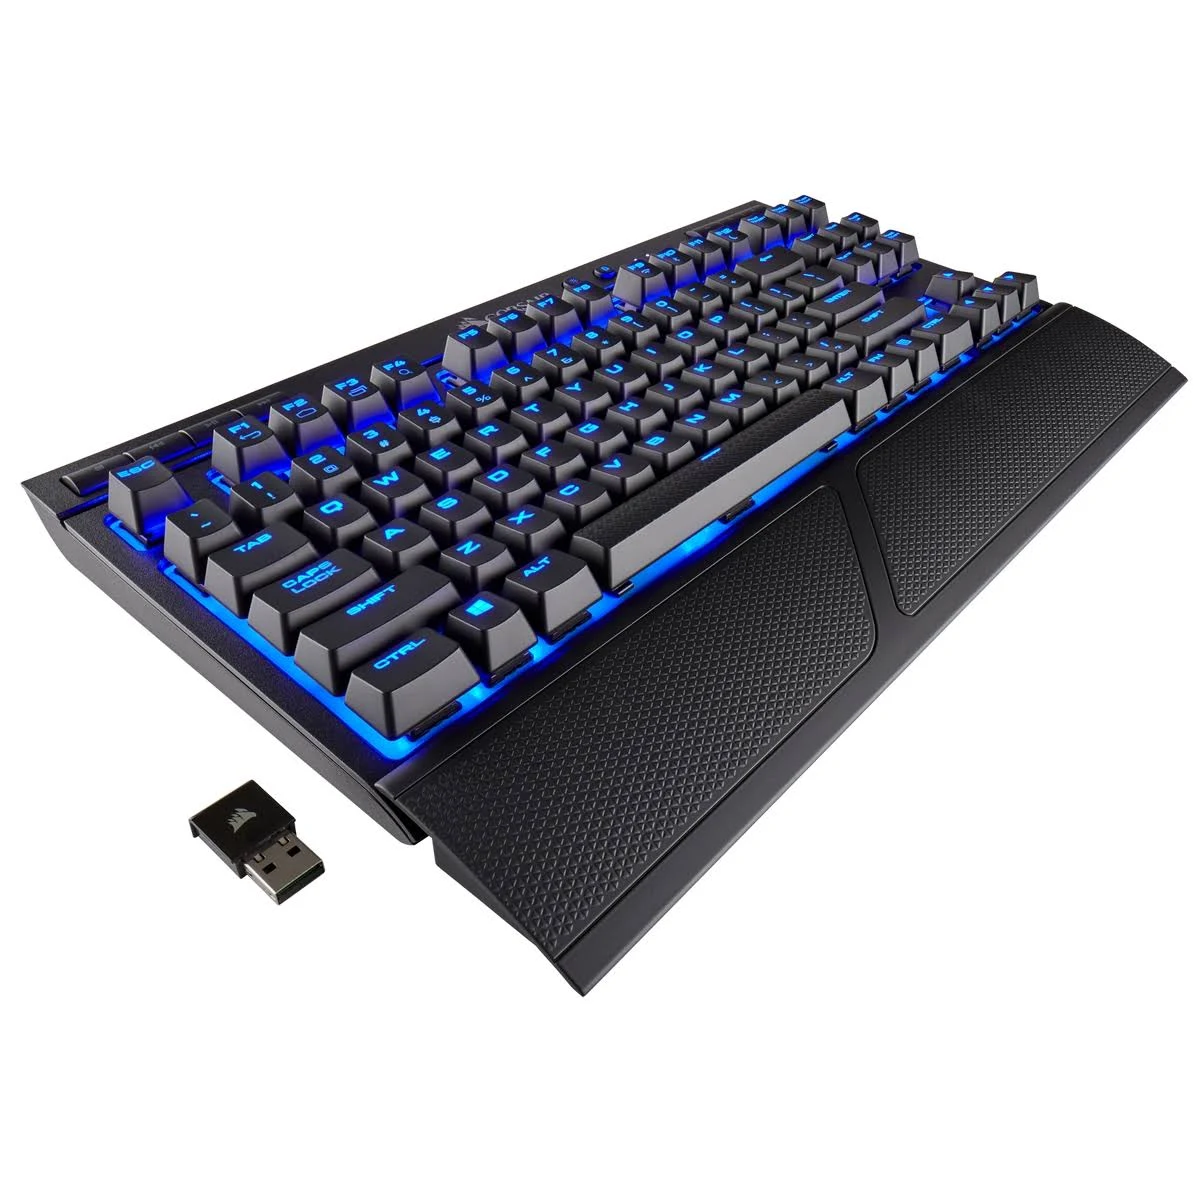 Corsair K63 Wireless Mechanical Gaming Keyboard - Black - $59.00